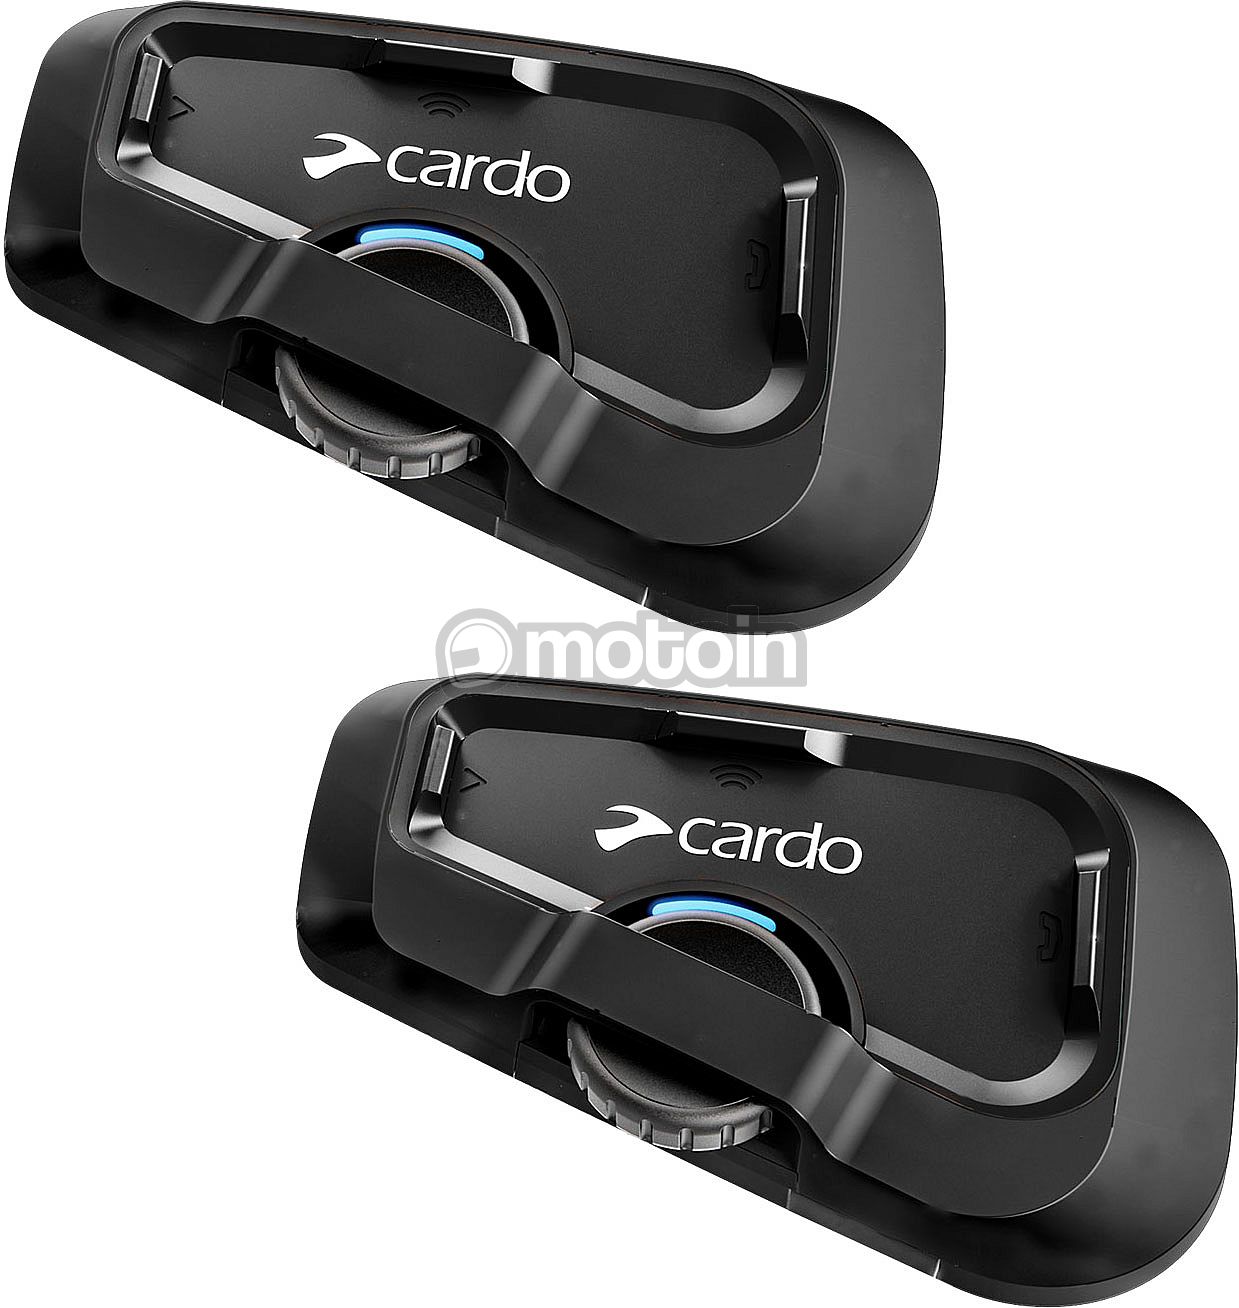 Cardo Freecom 2x, communication system twin set 